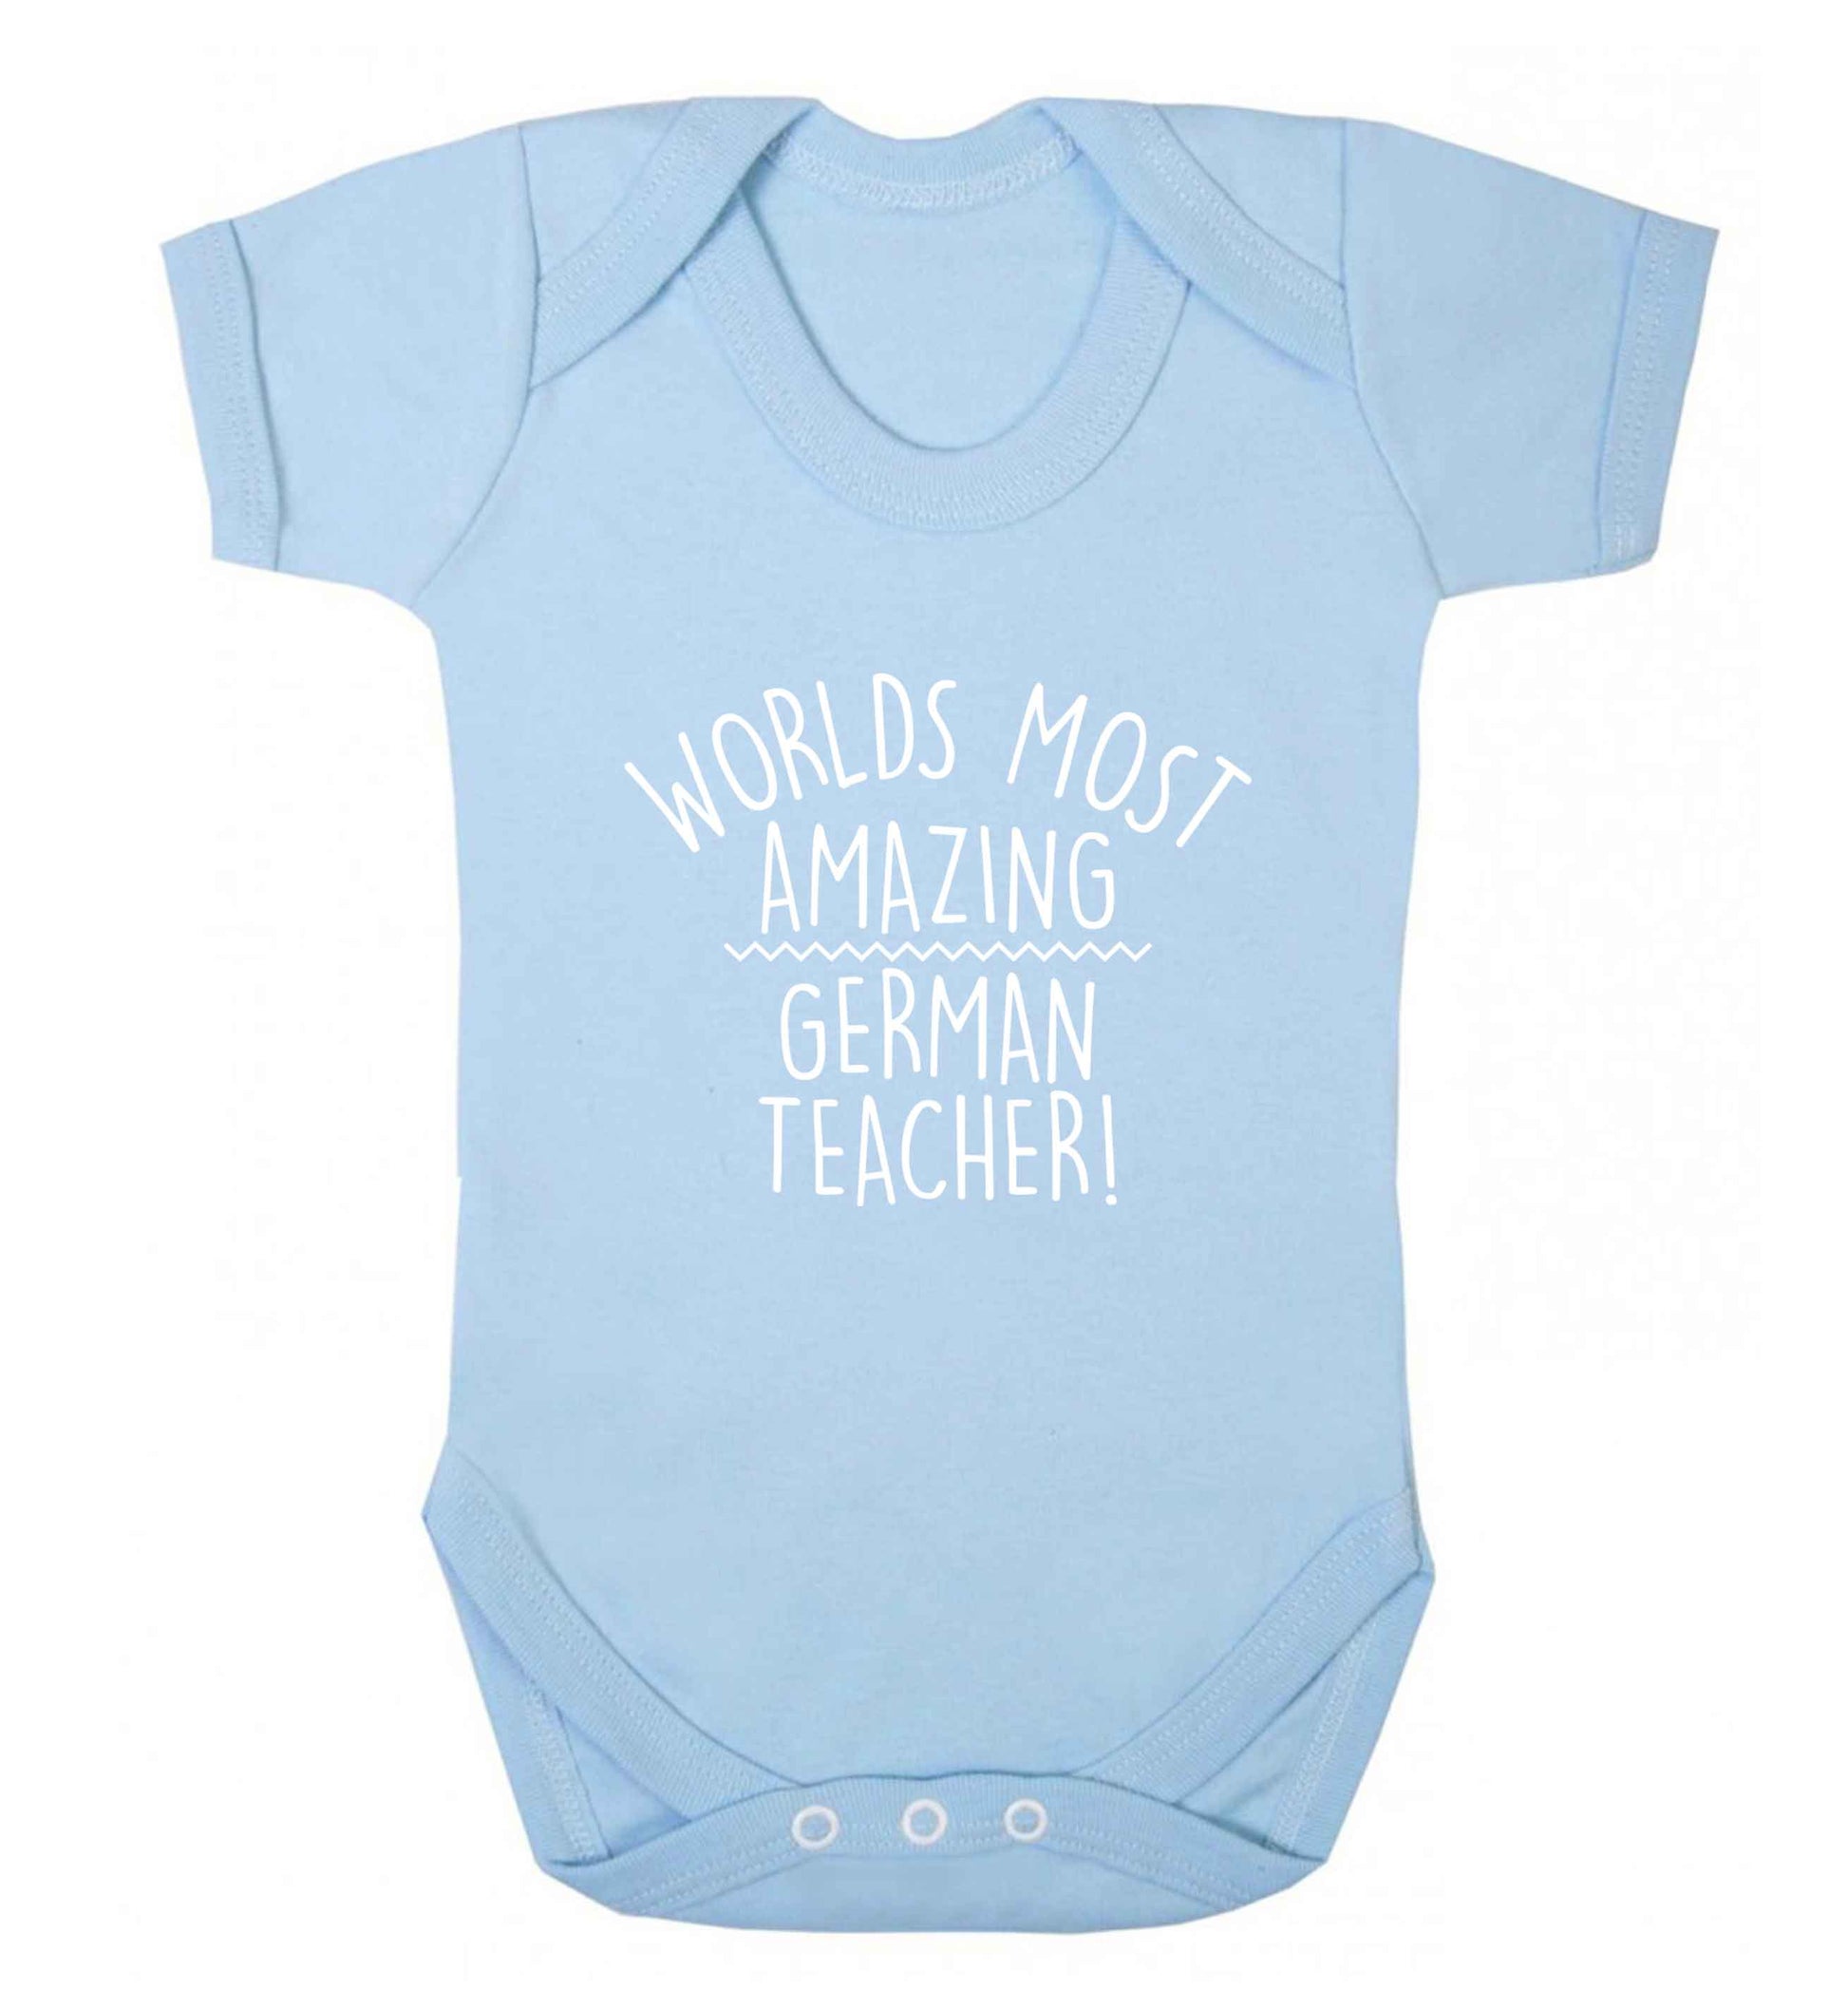 Worlds most amazing German teacher baby vest pale blue 18-24 months